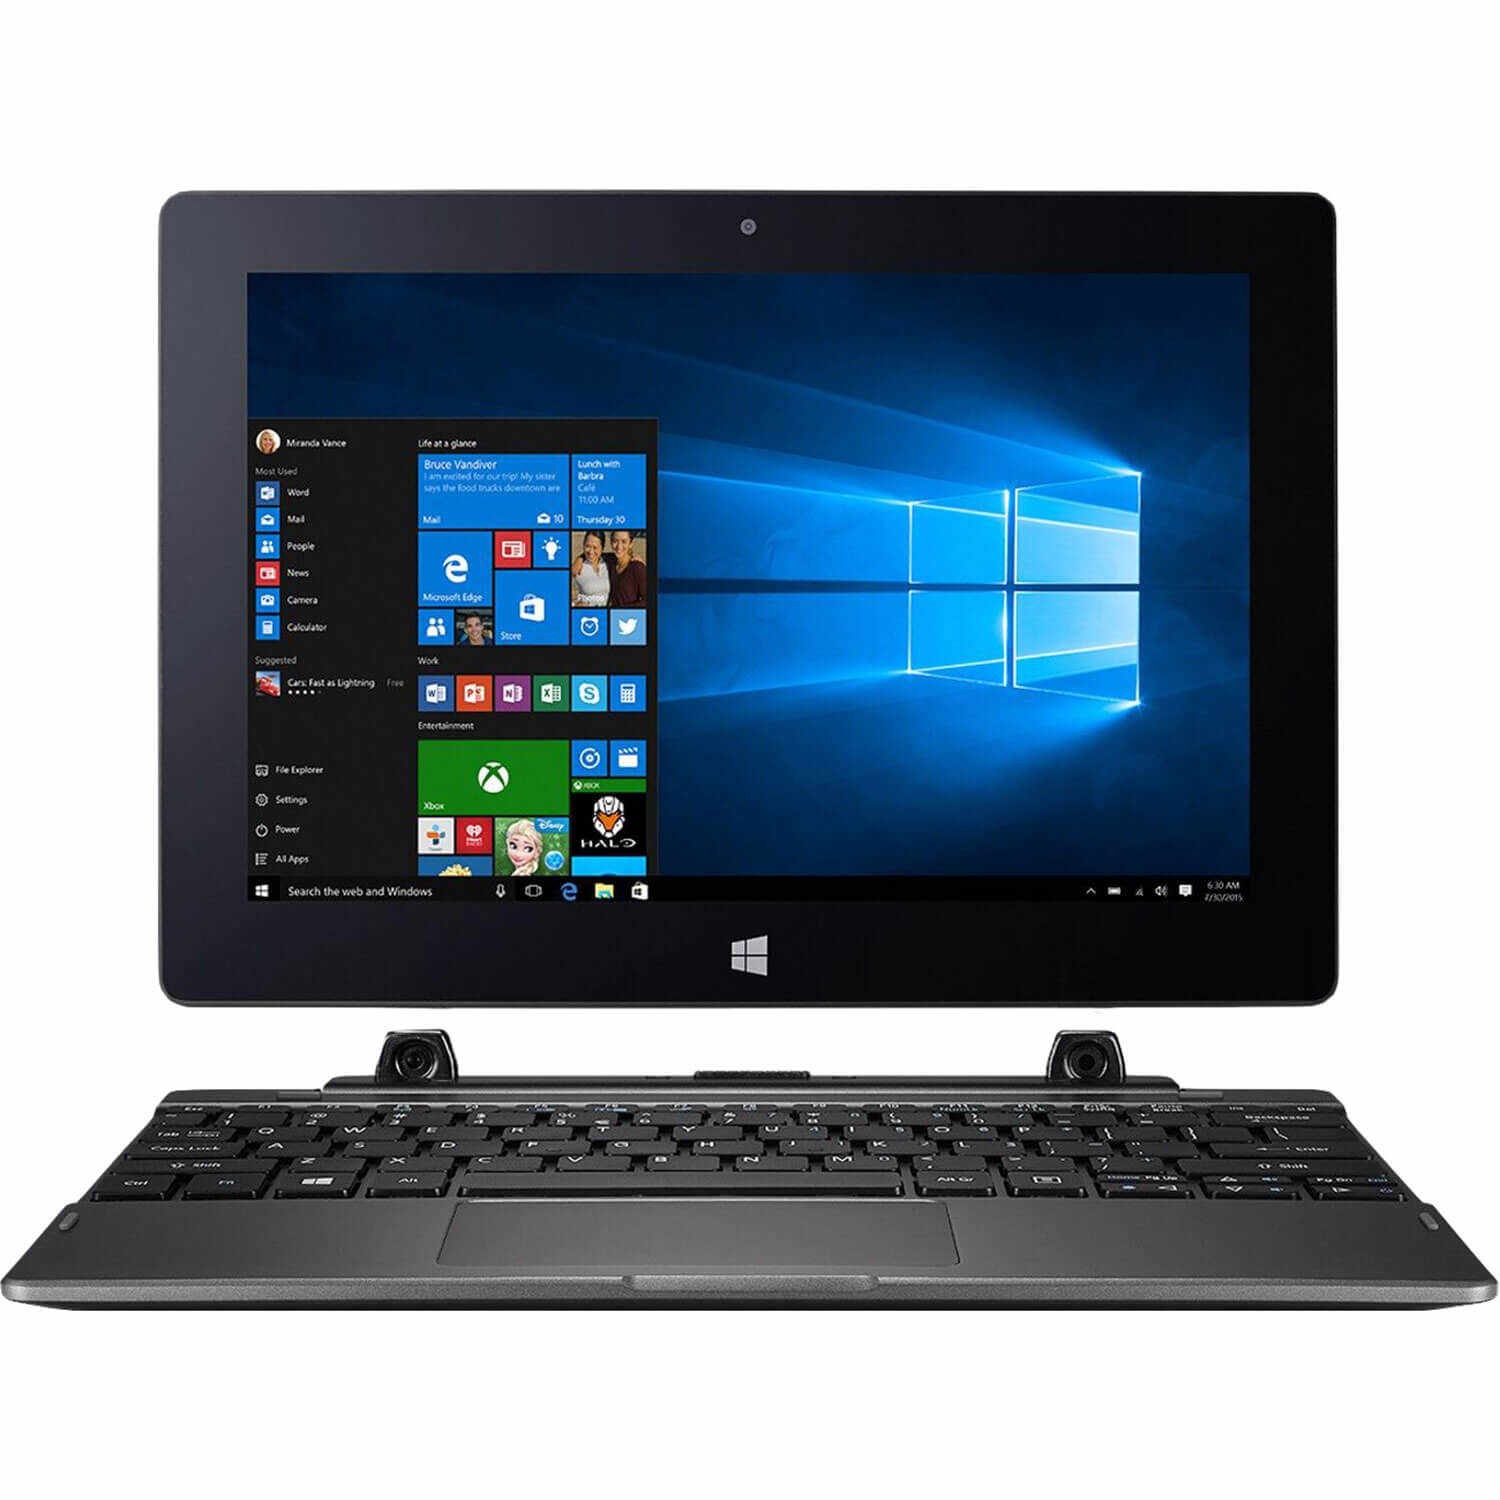 Laptop 2 in 1 Acer Aspire Switch One 10 SW1-011-19W7, Intel Atom X5-Z8300, 2GB DDR3, eMMC 32GB, Intel HD Graphics, Windows 10